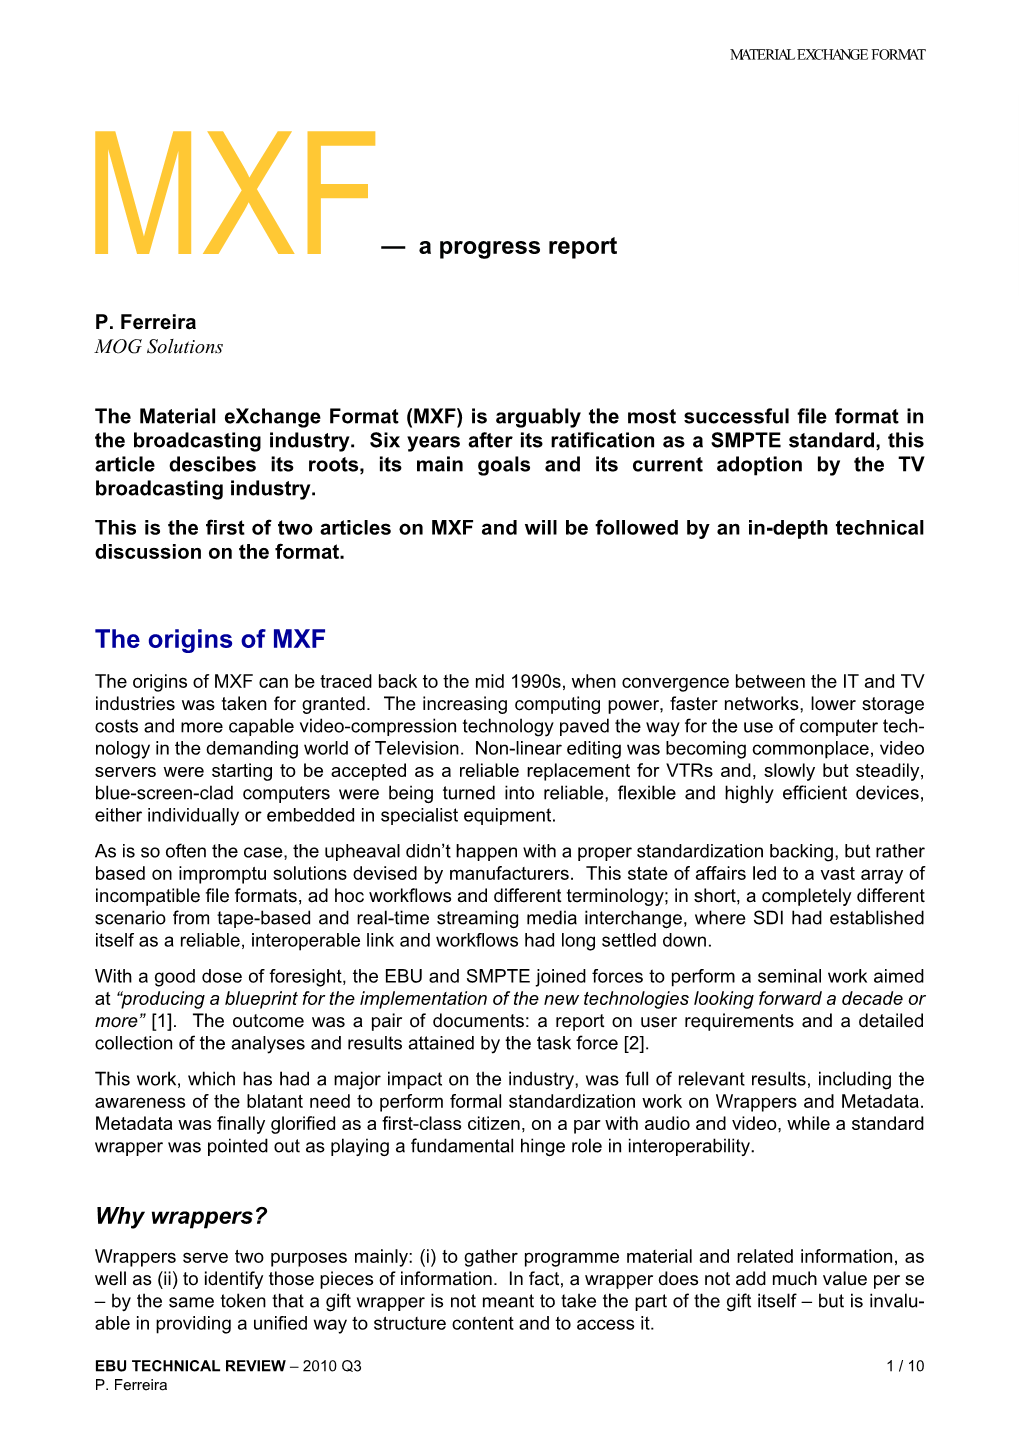 MXF — a Progress Report